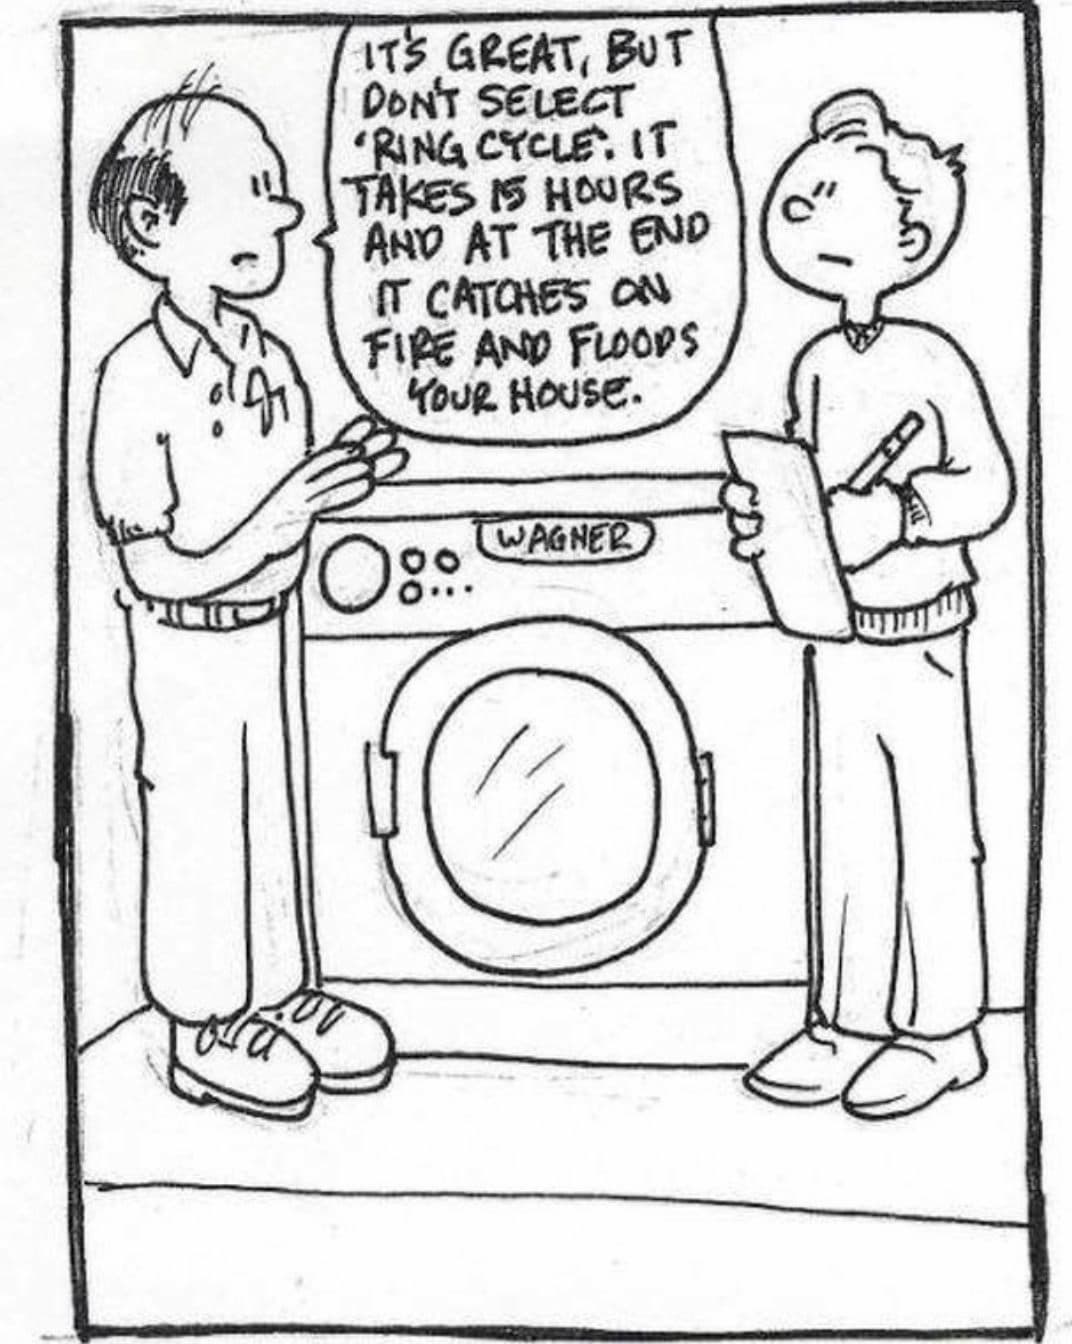 the ring cycle laundry setting music joke